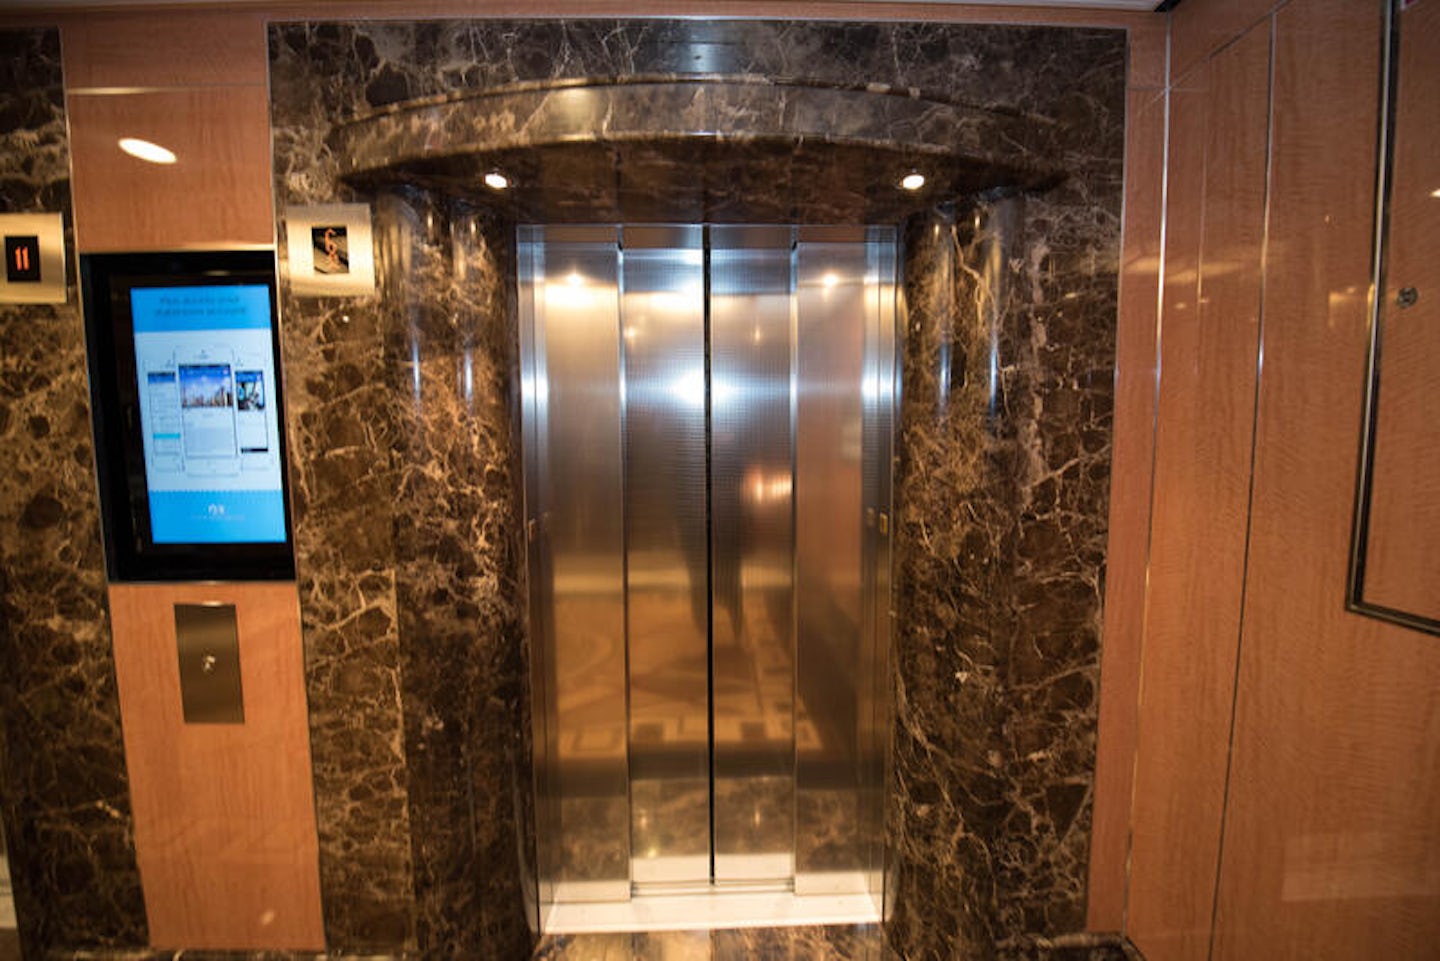 Elevators on Regal Princess